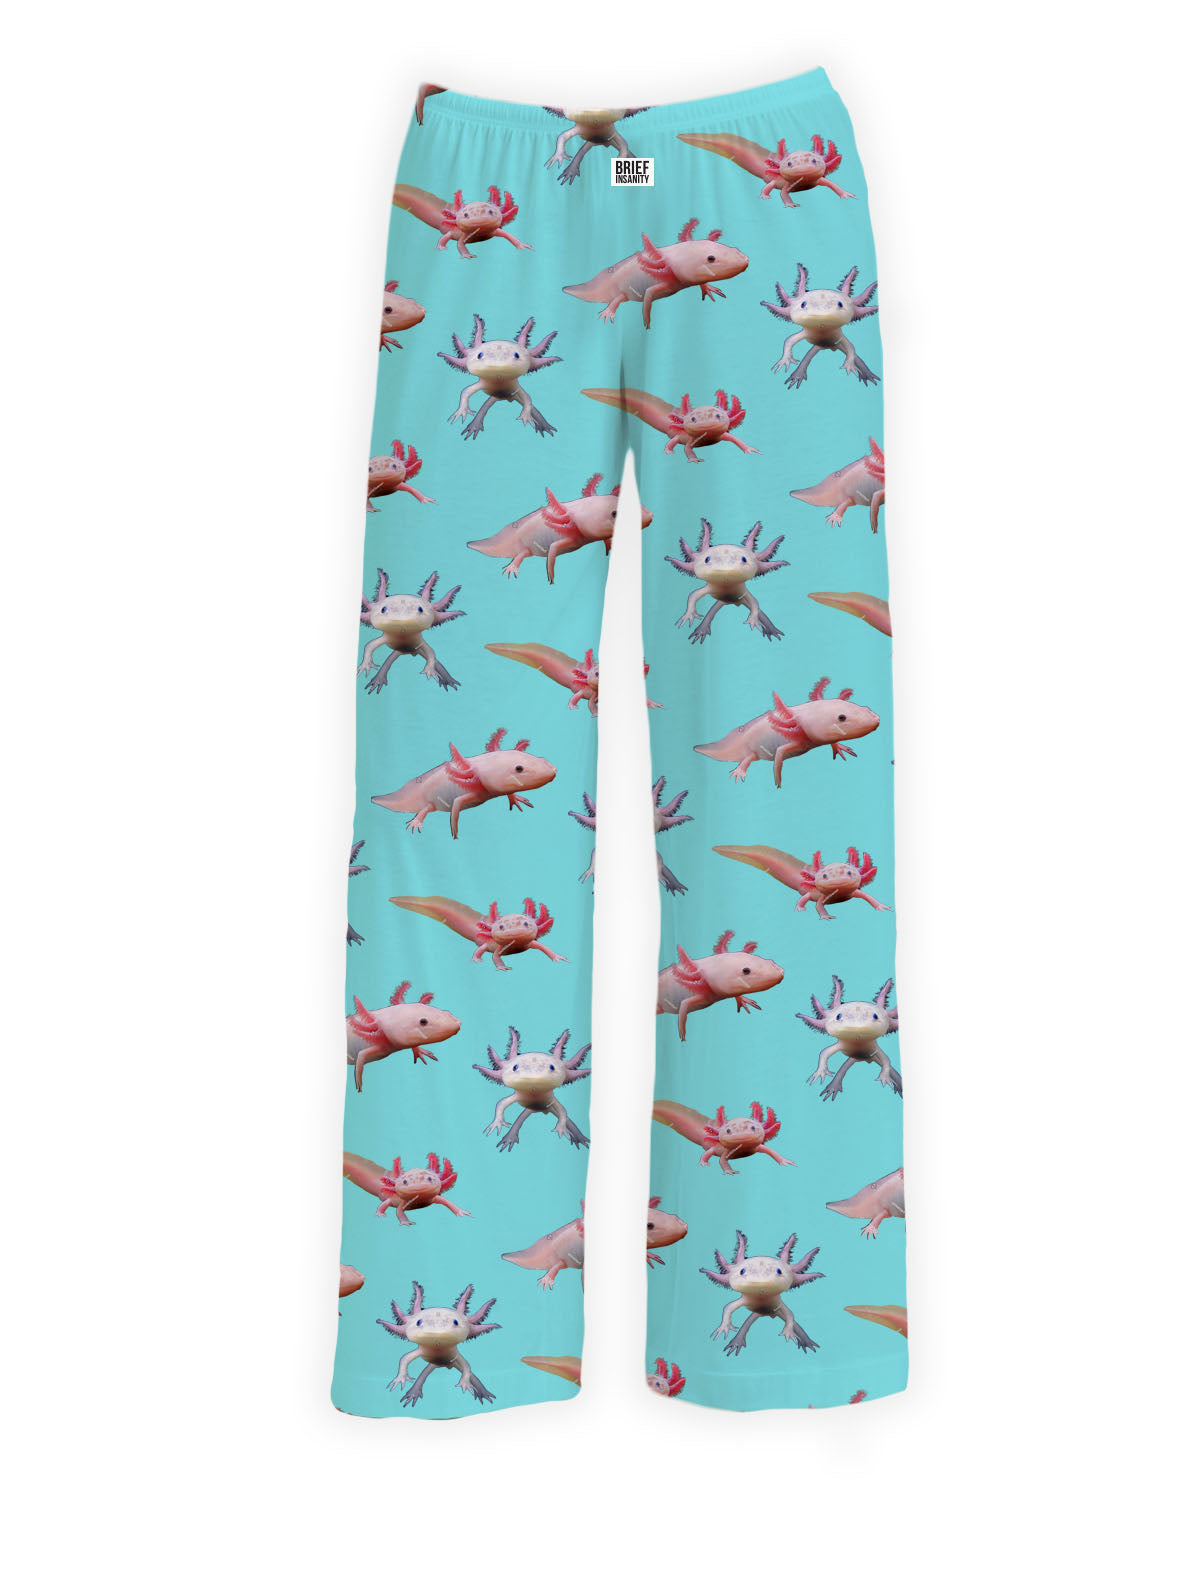 BRIEF INSANITY Axolotl Pajama Lounge Pants